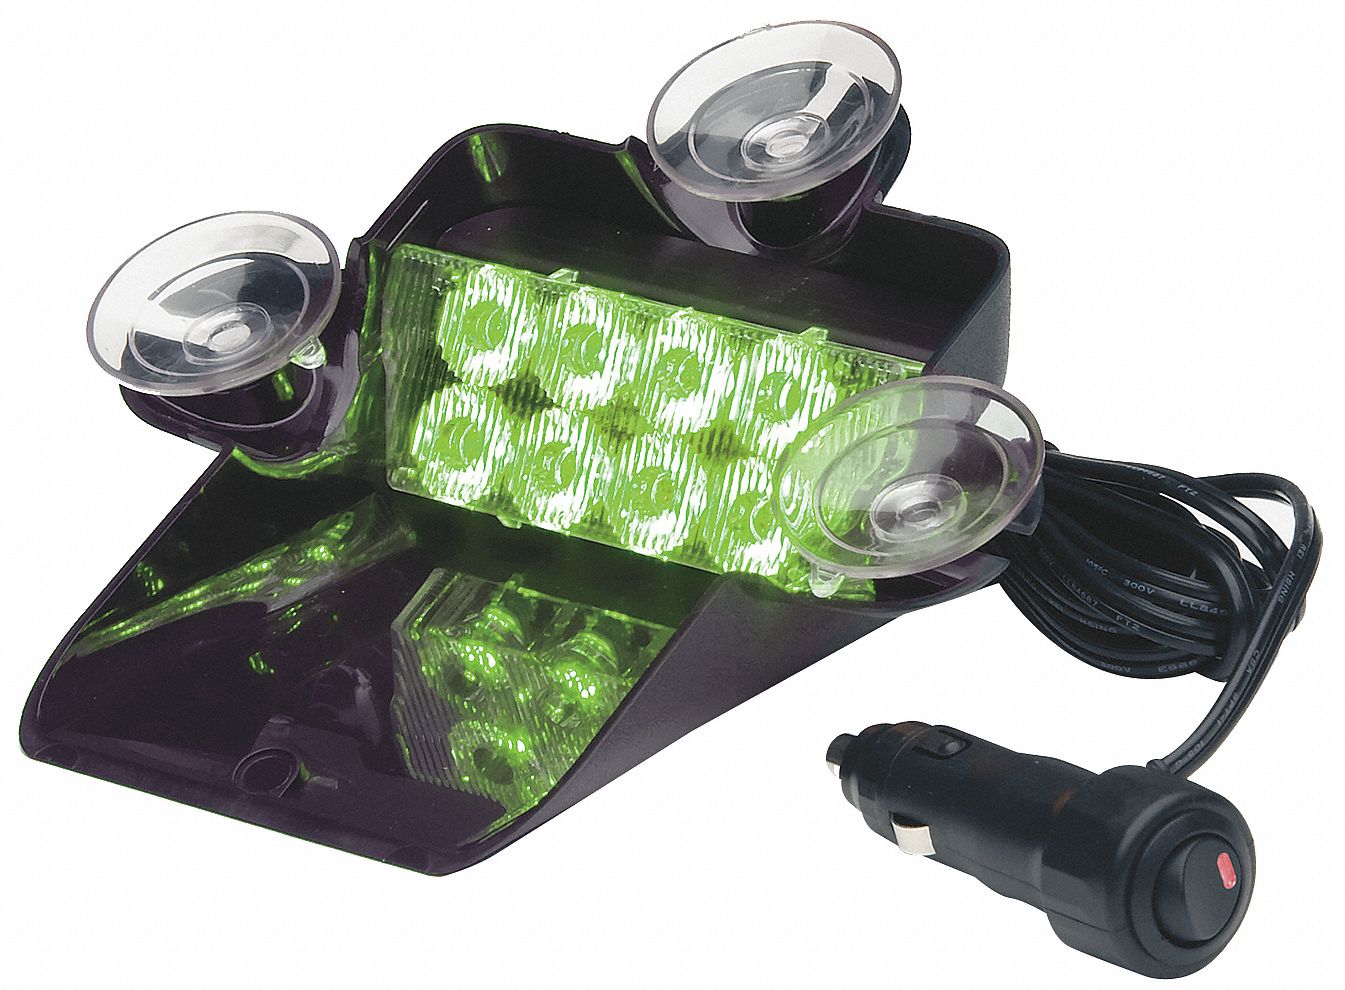 Single Head Dash/Deck Light: 17 Flash Patterns - Vehicle Lighting, 7 in Wd - Vehicle Lighting